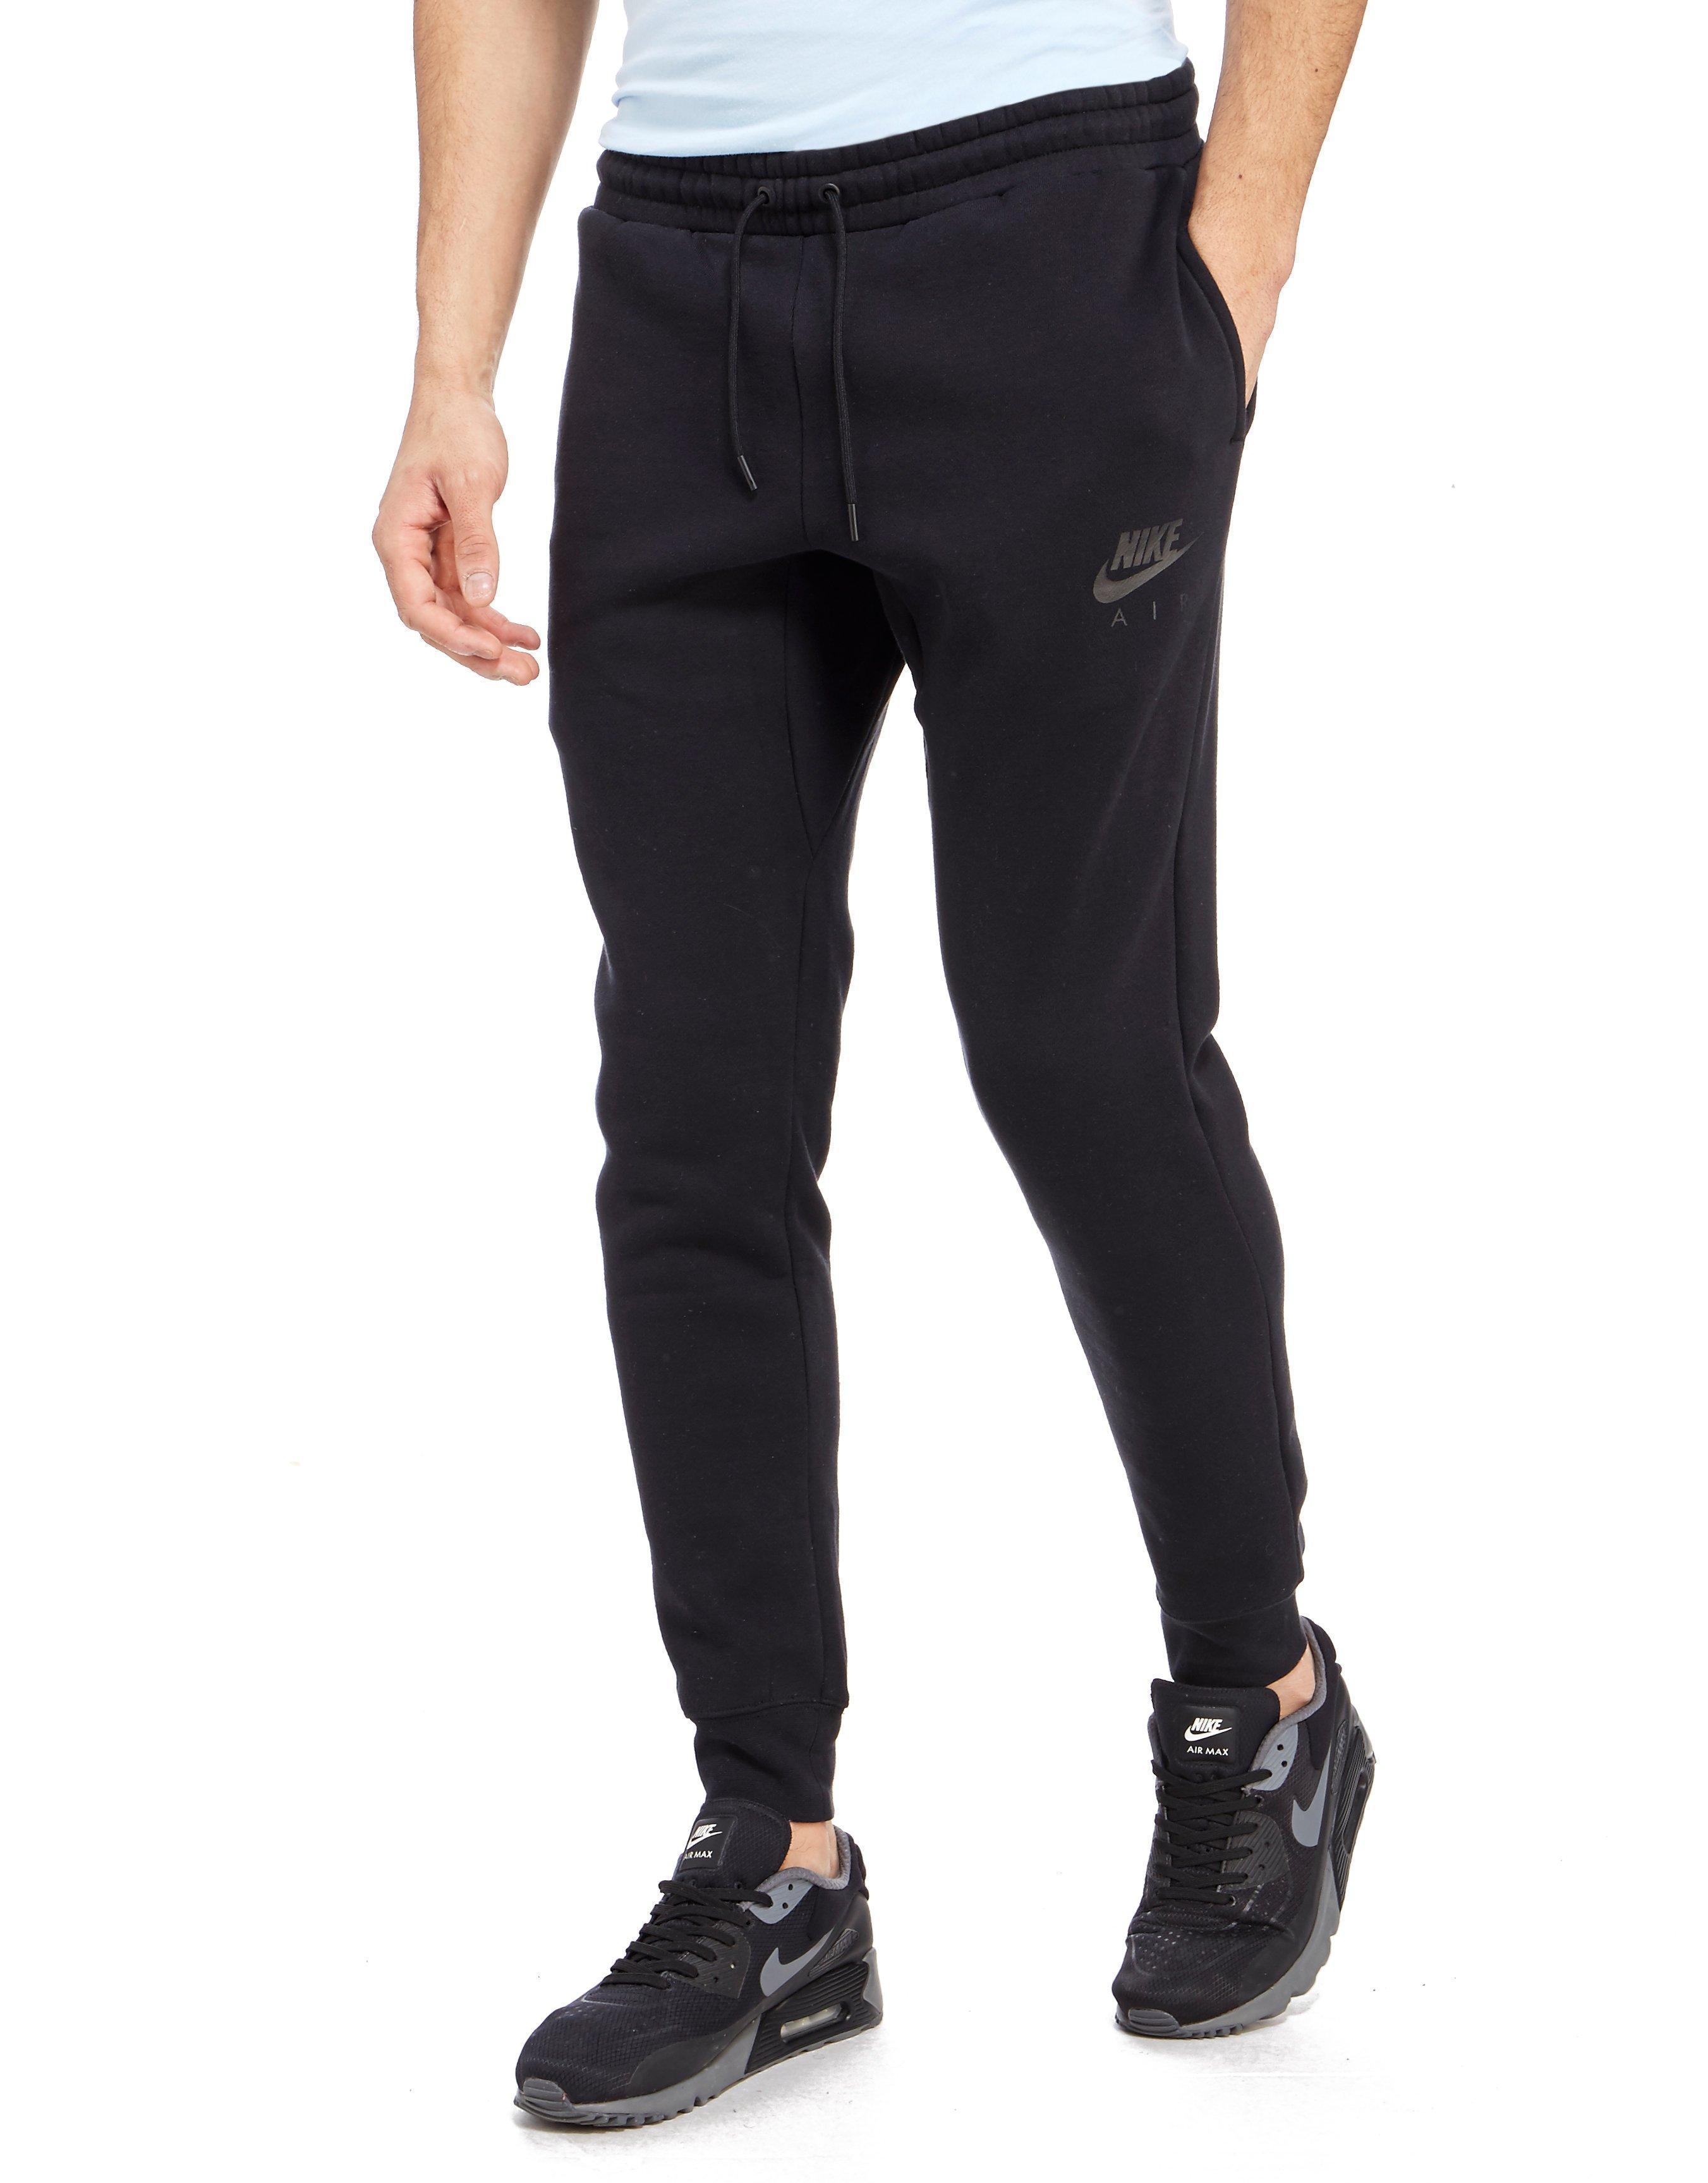 Nike Cotton Air Hybrid Jogging Pants in Black/White (Black) for Men - Lyst